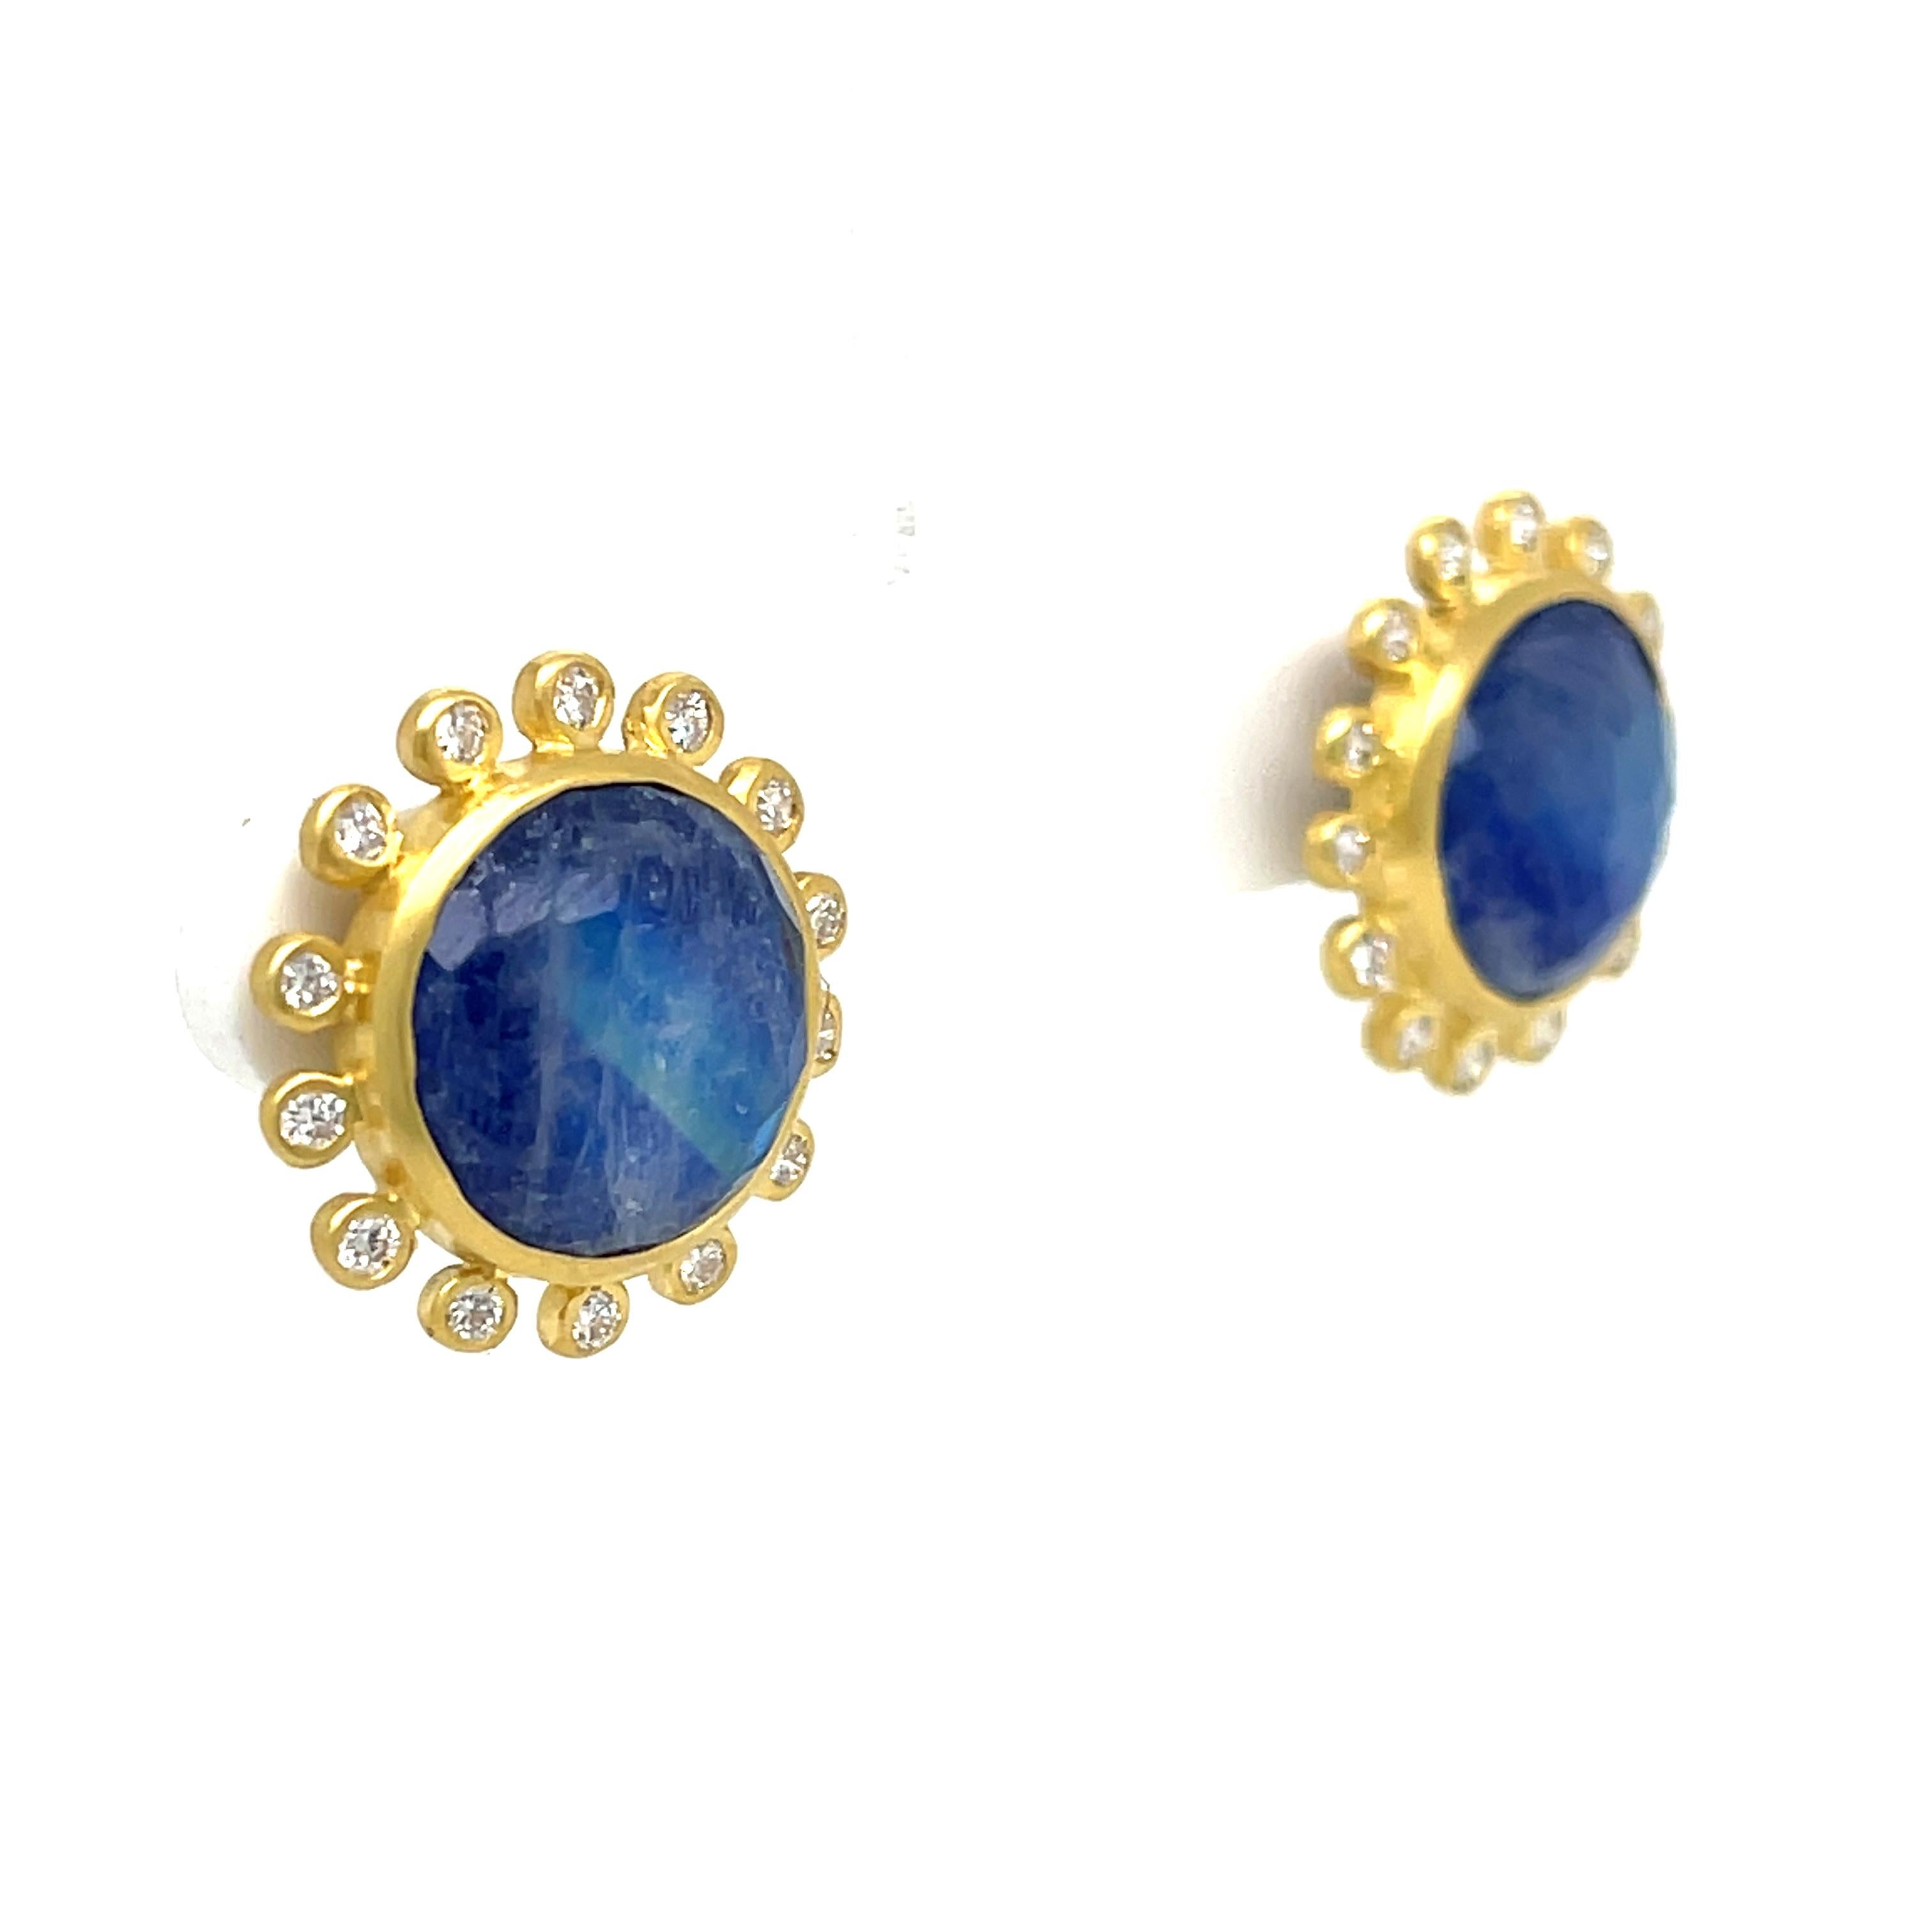 Mazza Lapis Moonstone Doublet and Diamond (0.56ctw) Earrings in 14K Yellow Gold.
Diameter 0.75